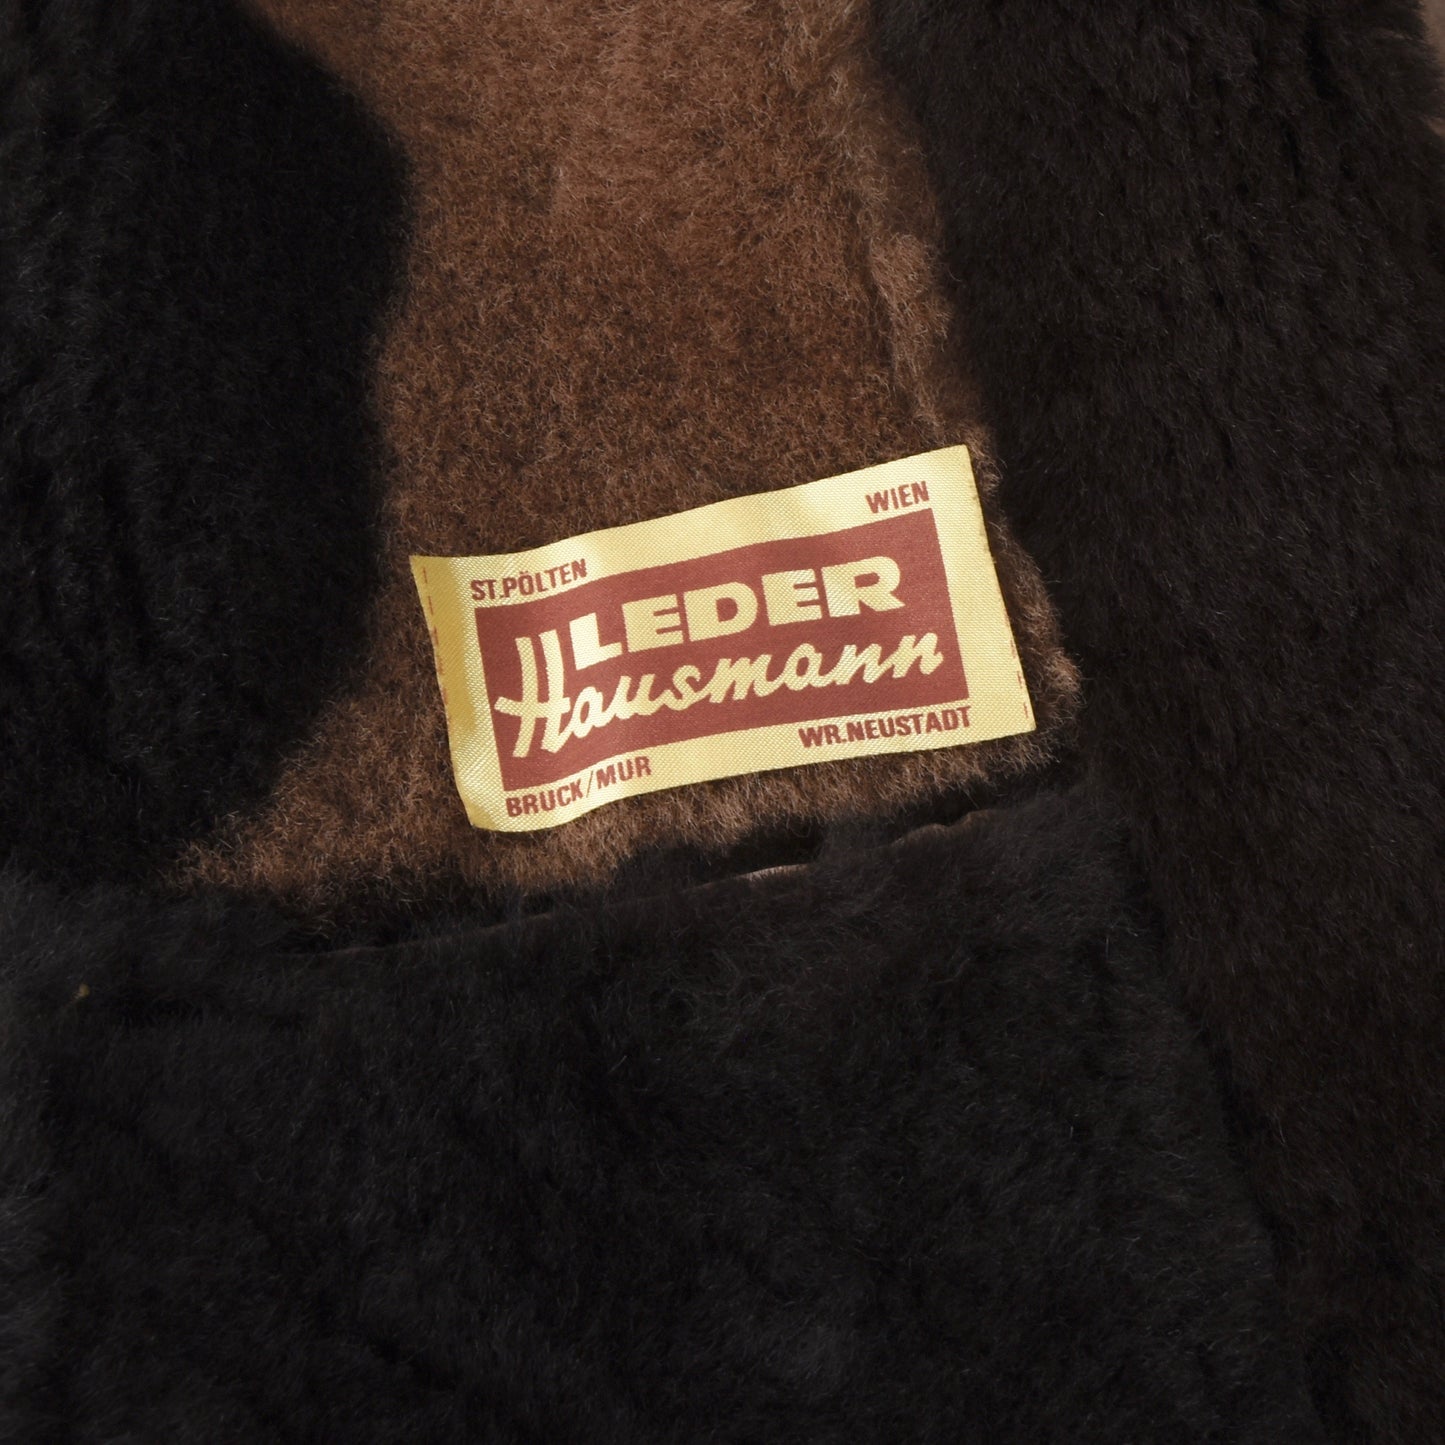 Hausmann Leder Shearling Vest/Gilet Size 46 - Brown/Tan